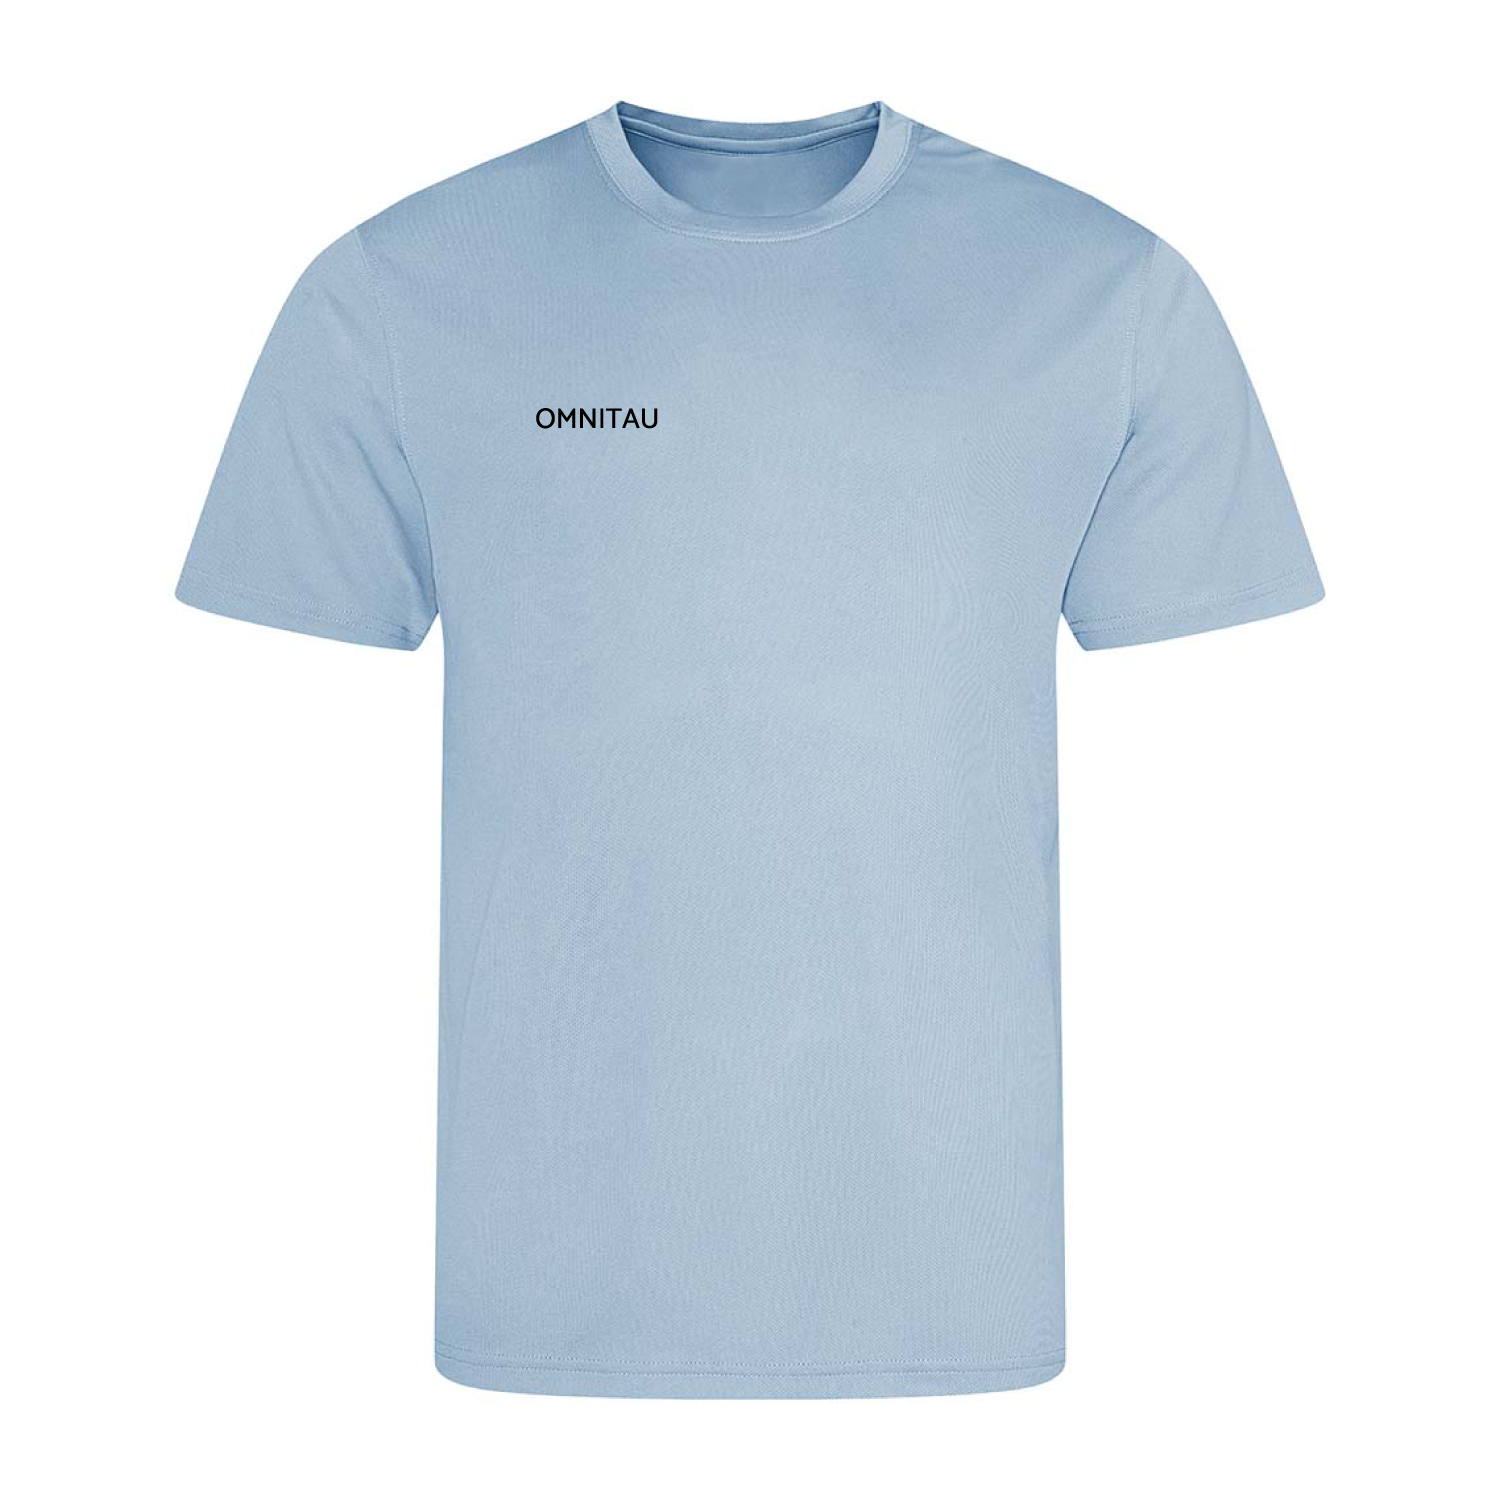 Omnitau Kid's Team Sports Core Football Shirt - Sky Blue